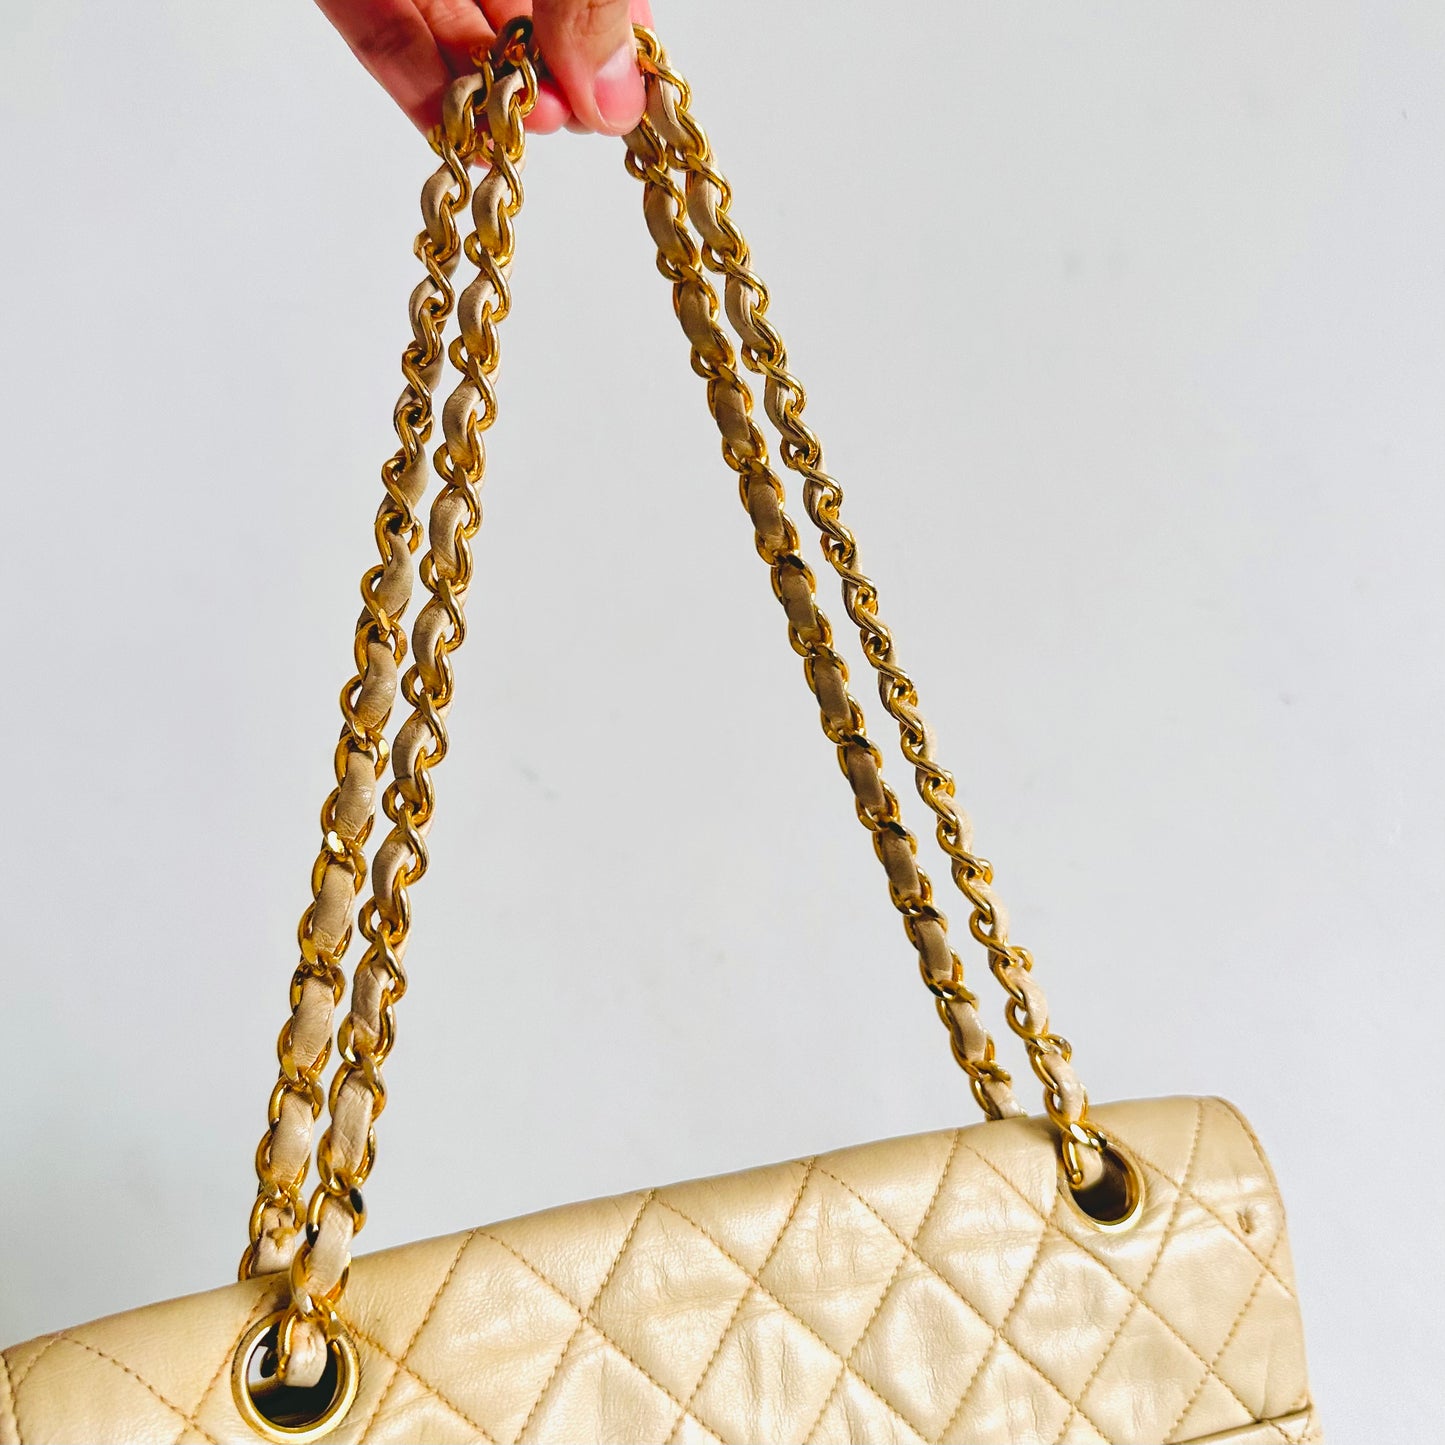 Chanel Beige Clair GHW CC Logo Diana Classic Quilted Lambskin Medium Single Flap Turnlock Vintage Shoulder Sling Bag